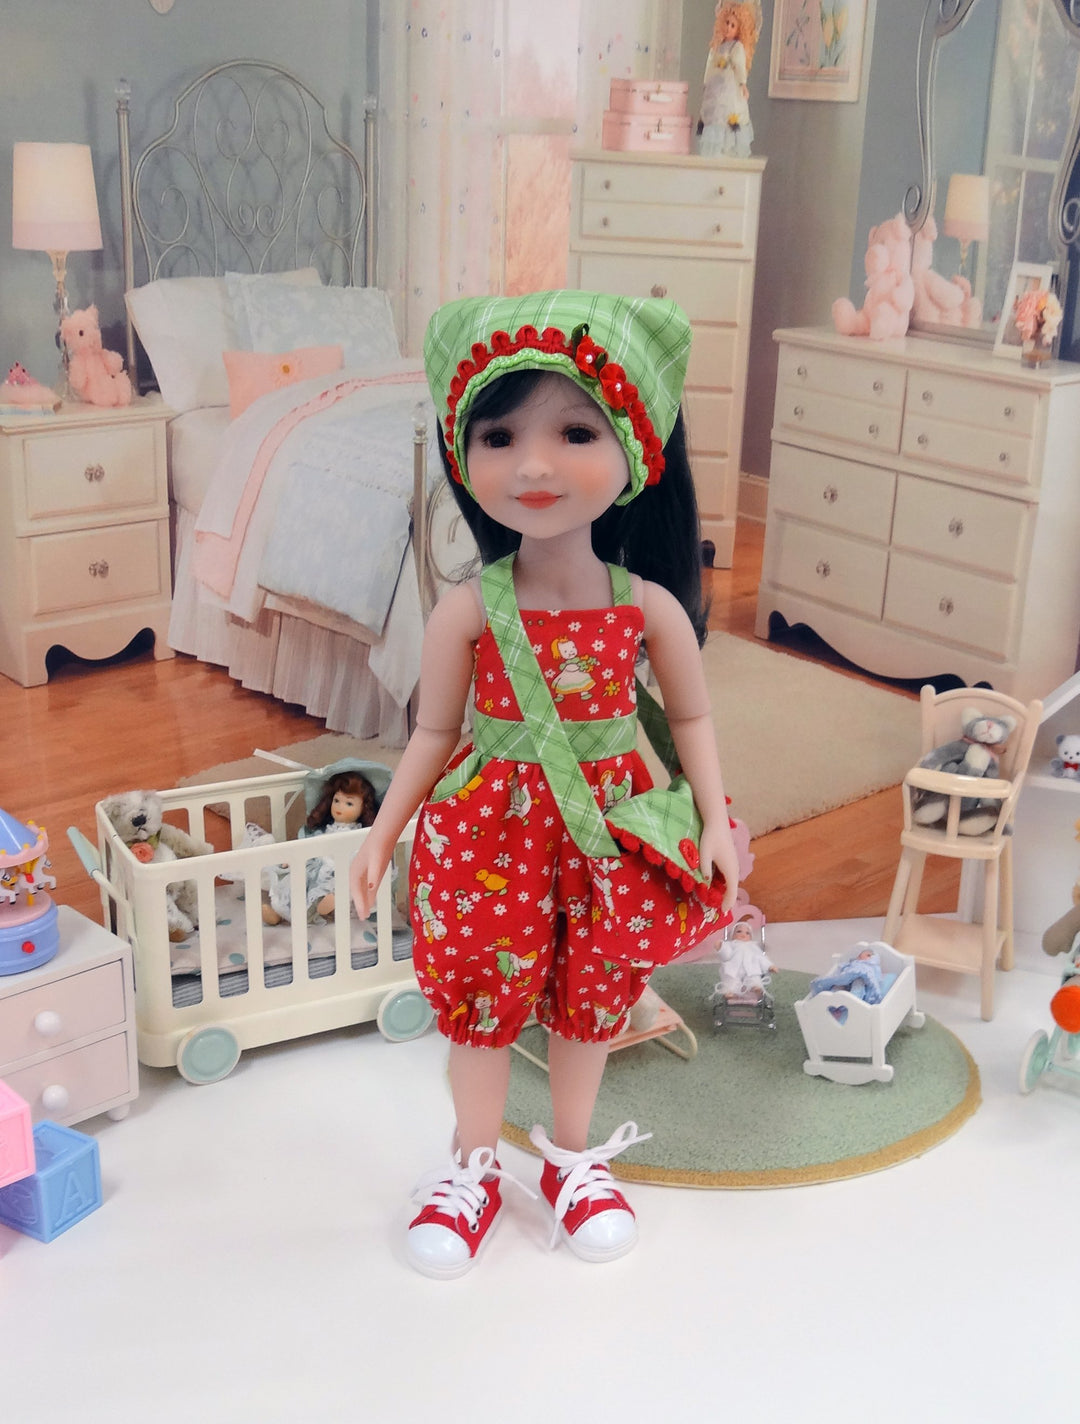 Farmhouse Friends - romper for Ruby Red Fashion Friends doll